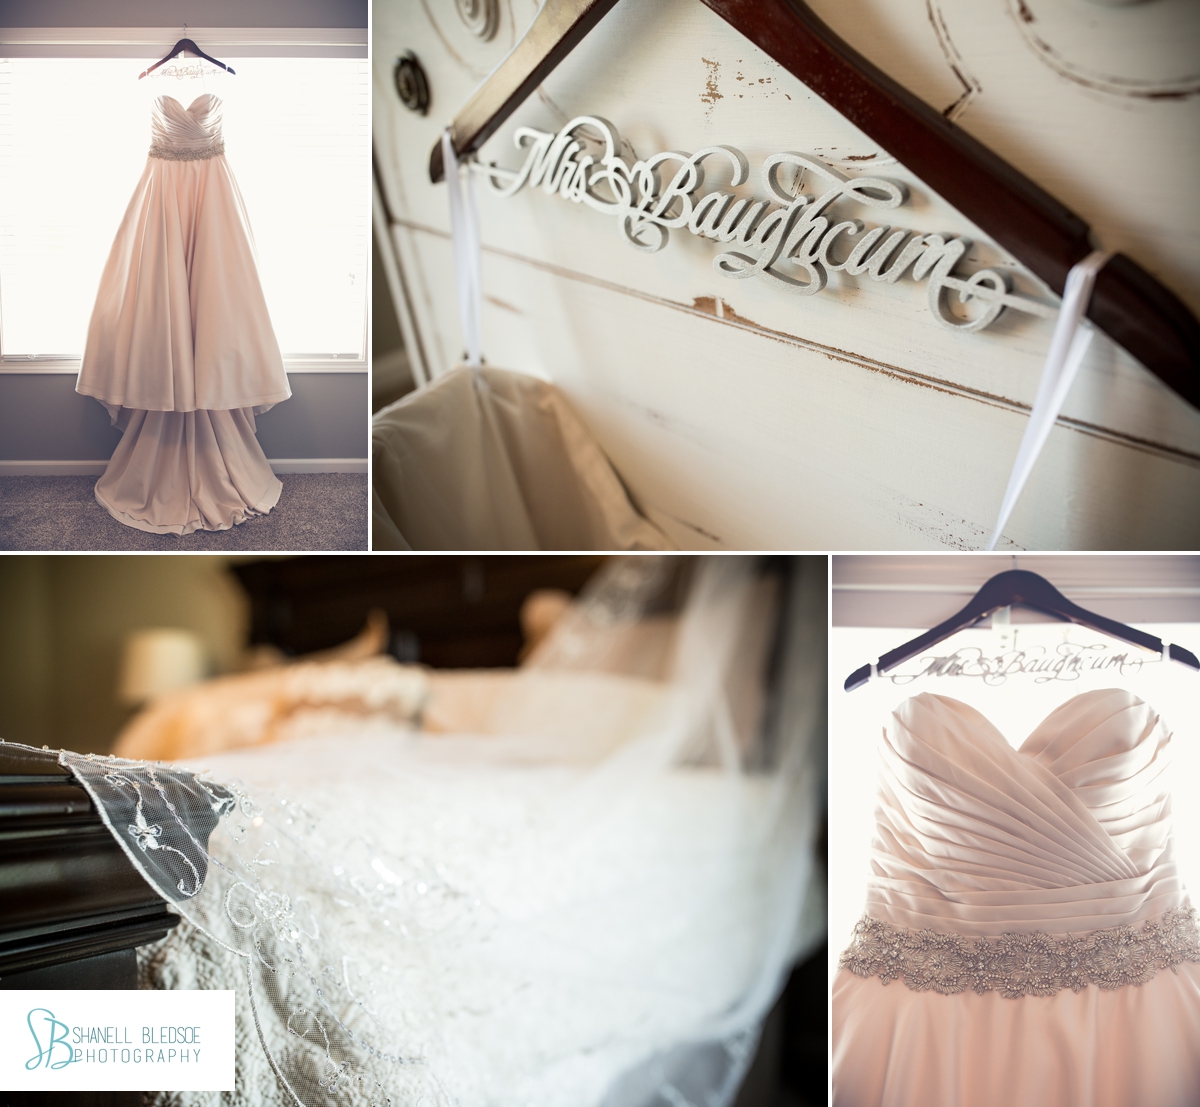 custom wedding gown hanger, wedding dress in window